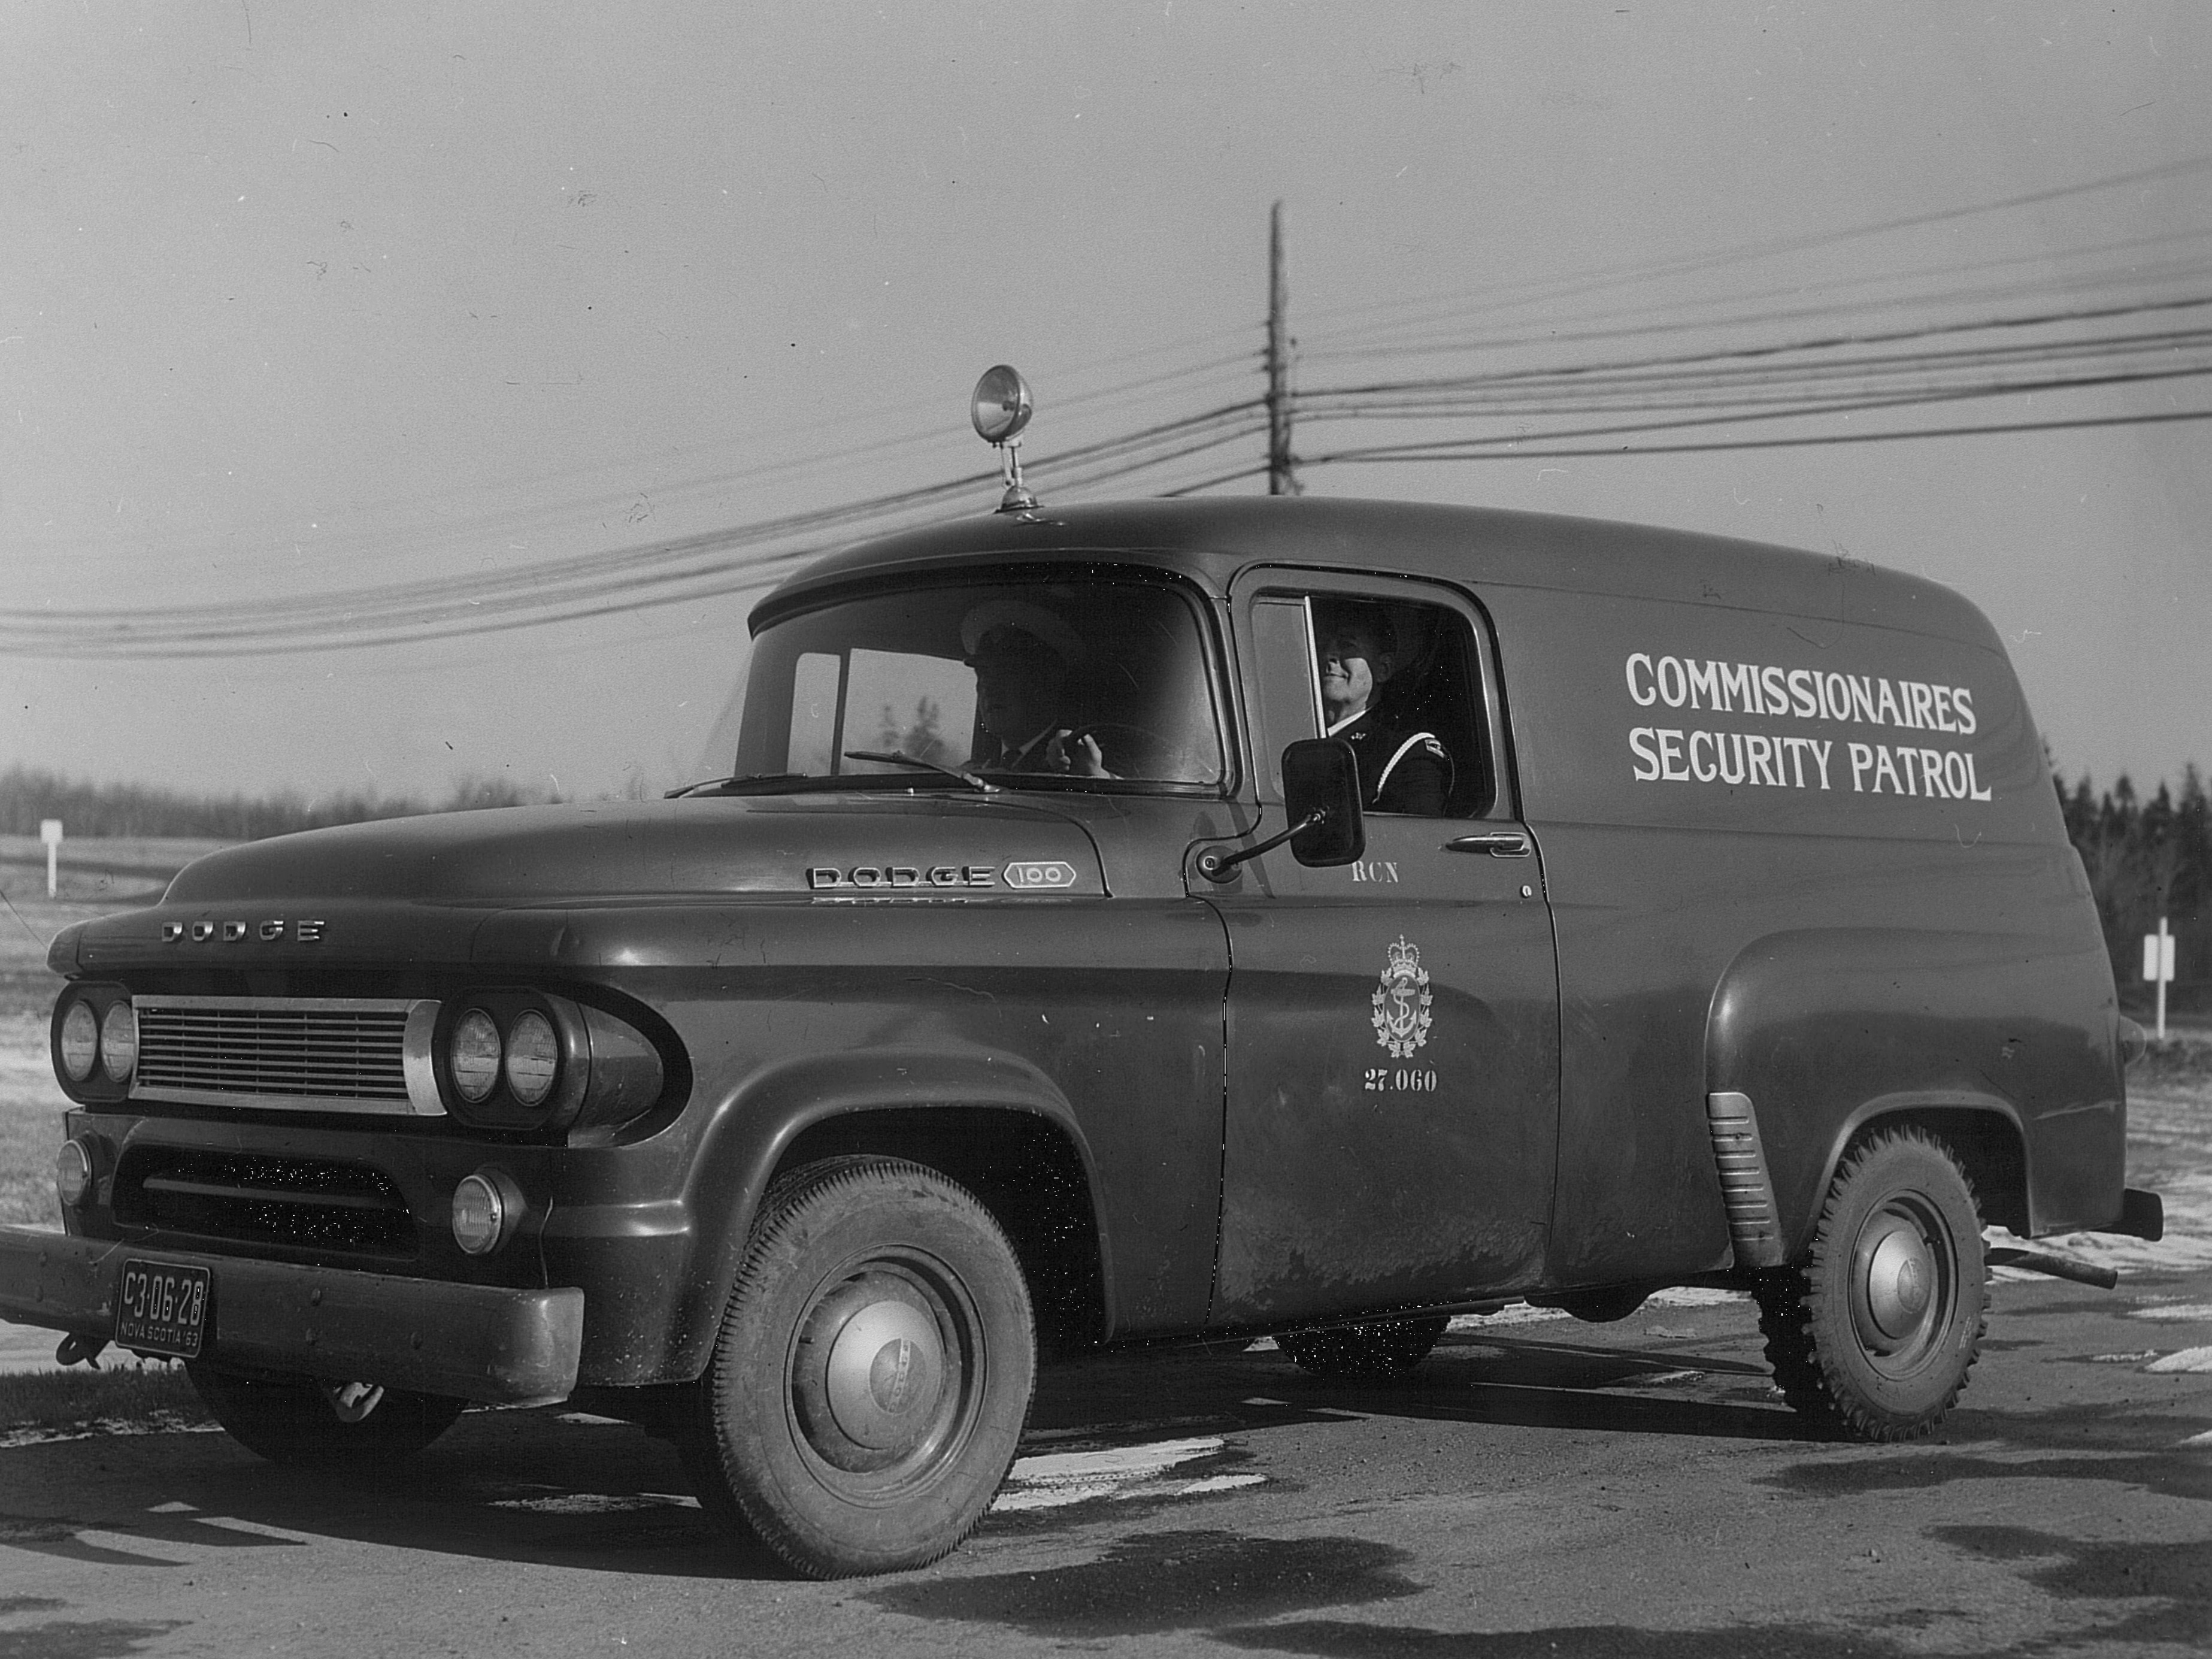 Commissionaires historic security patrol car